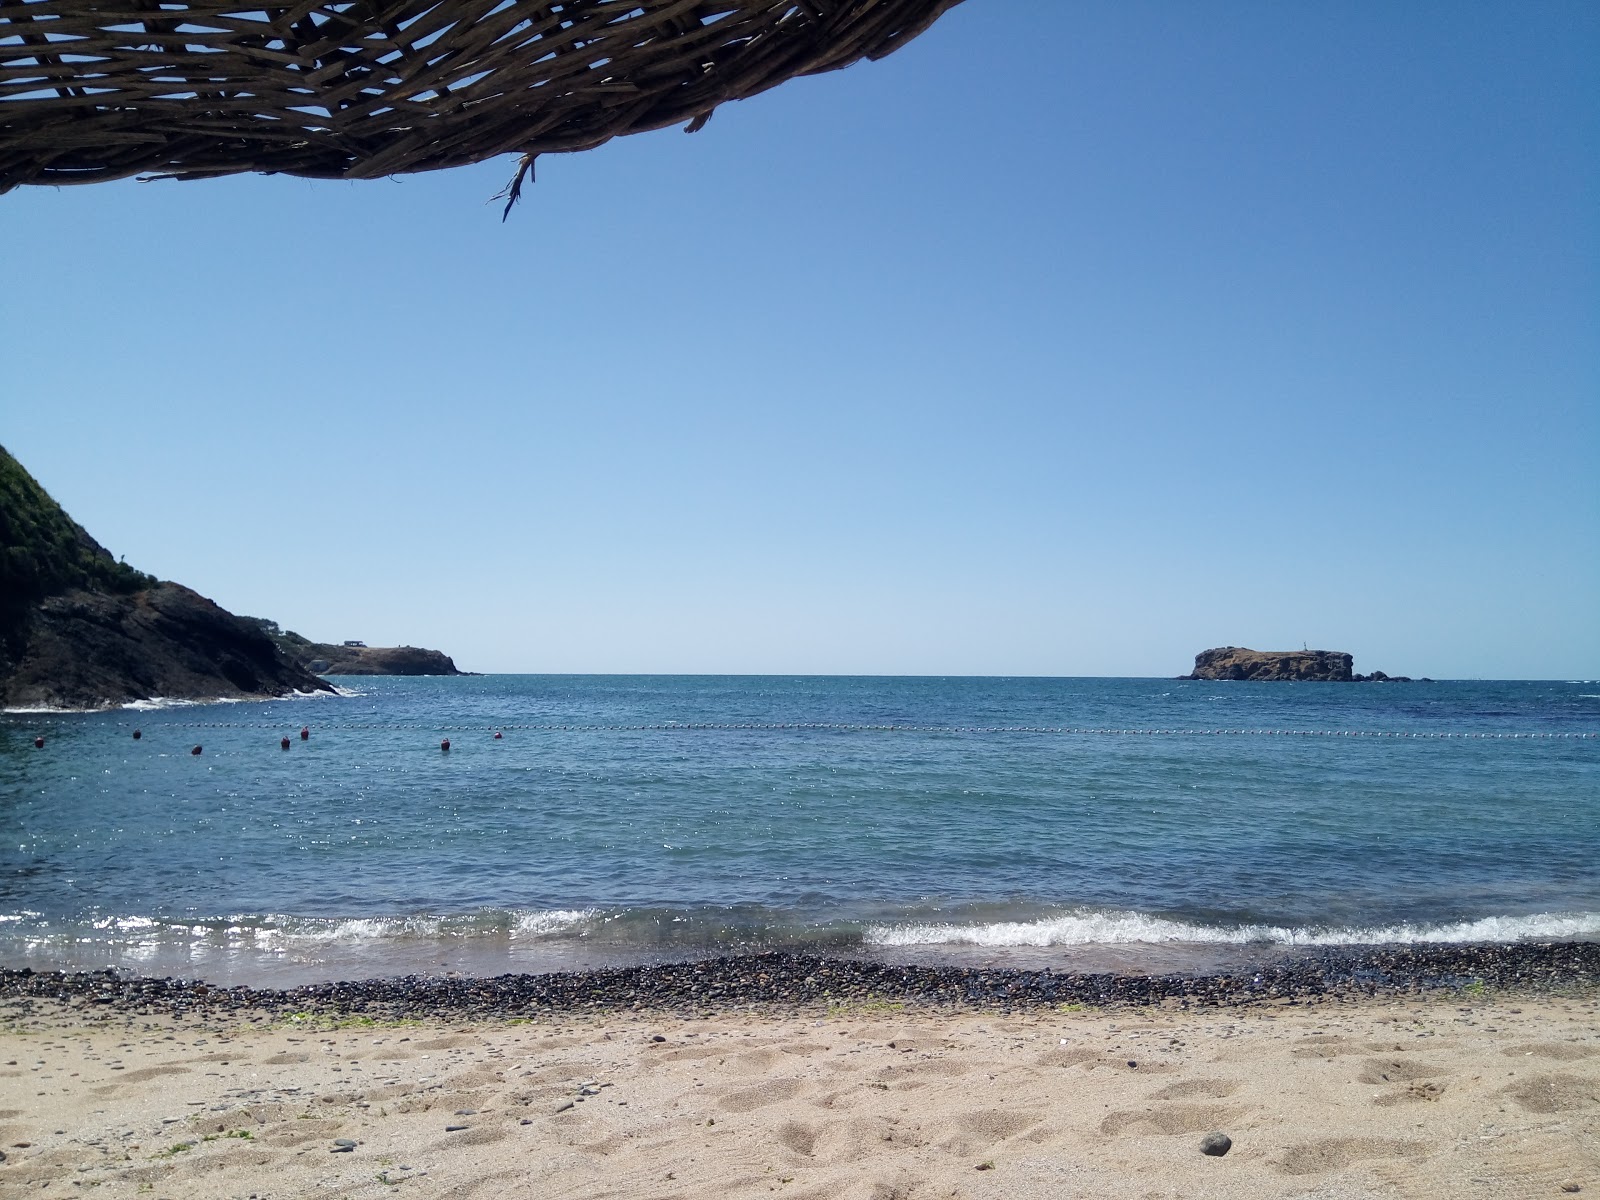 Photo of Riva 3.koy beach resort area